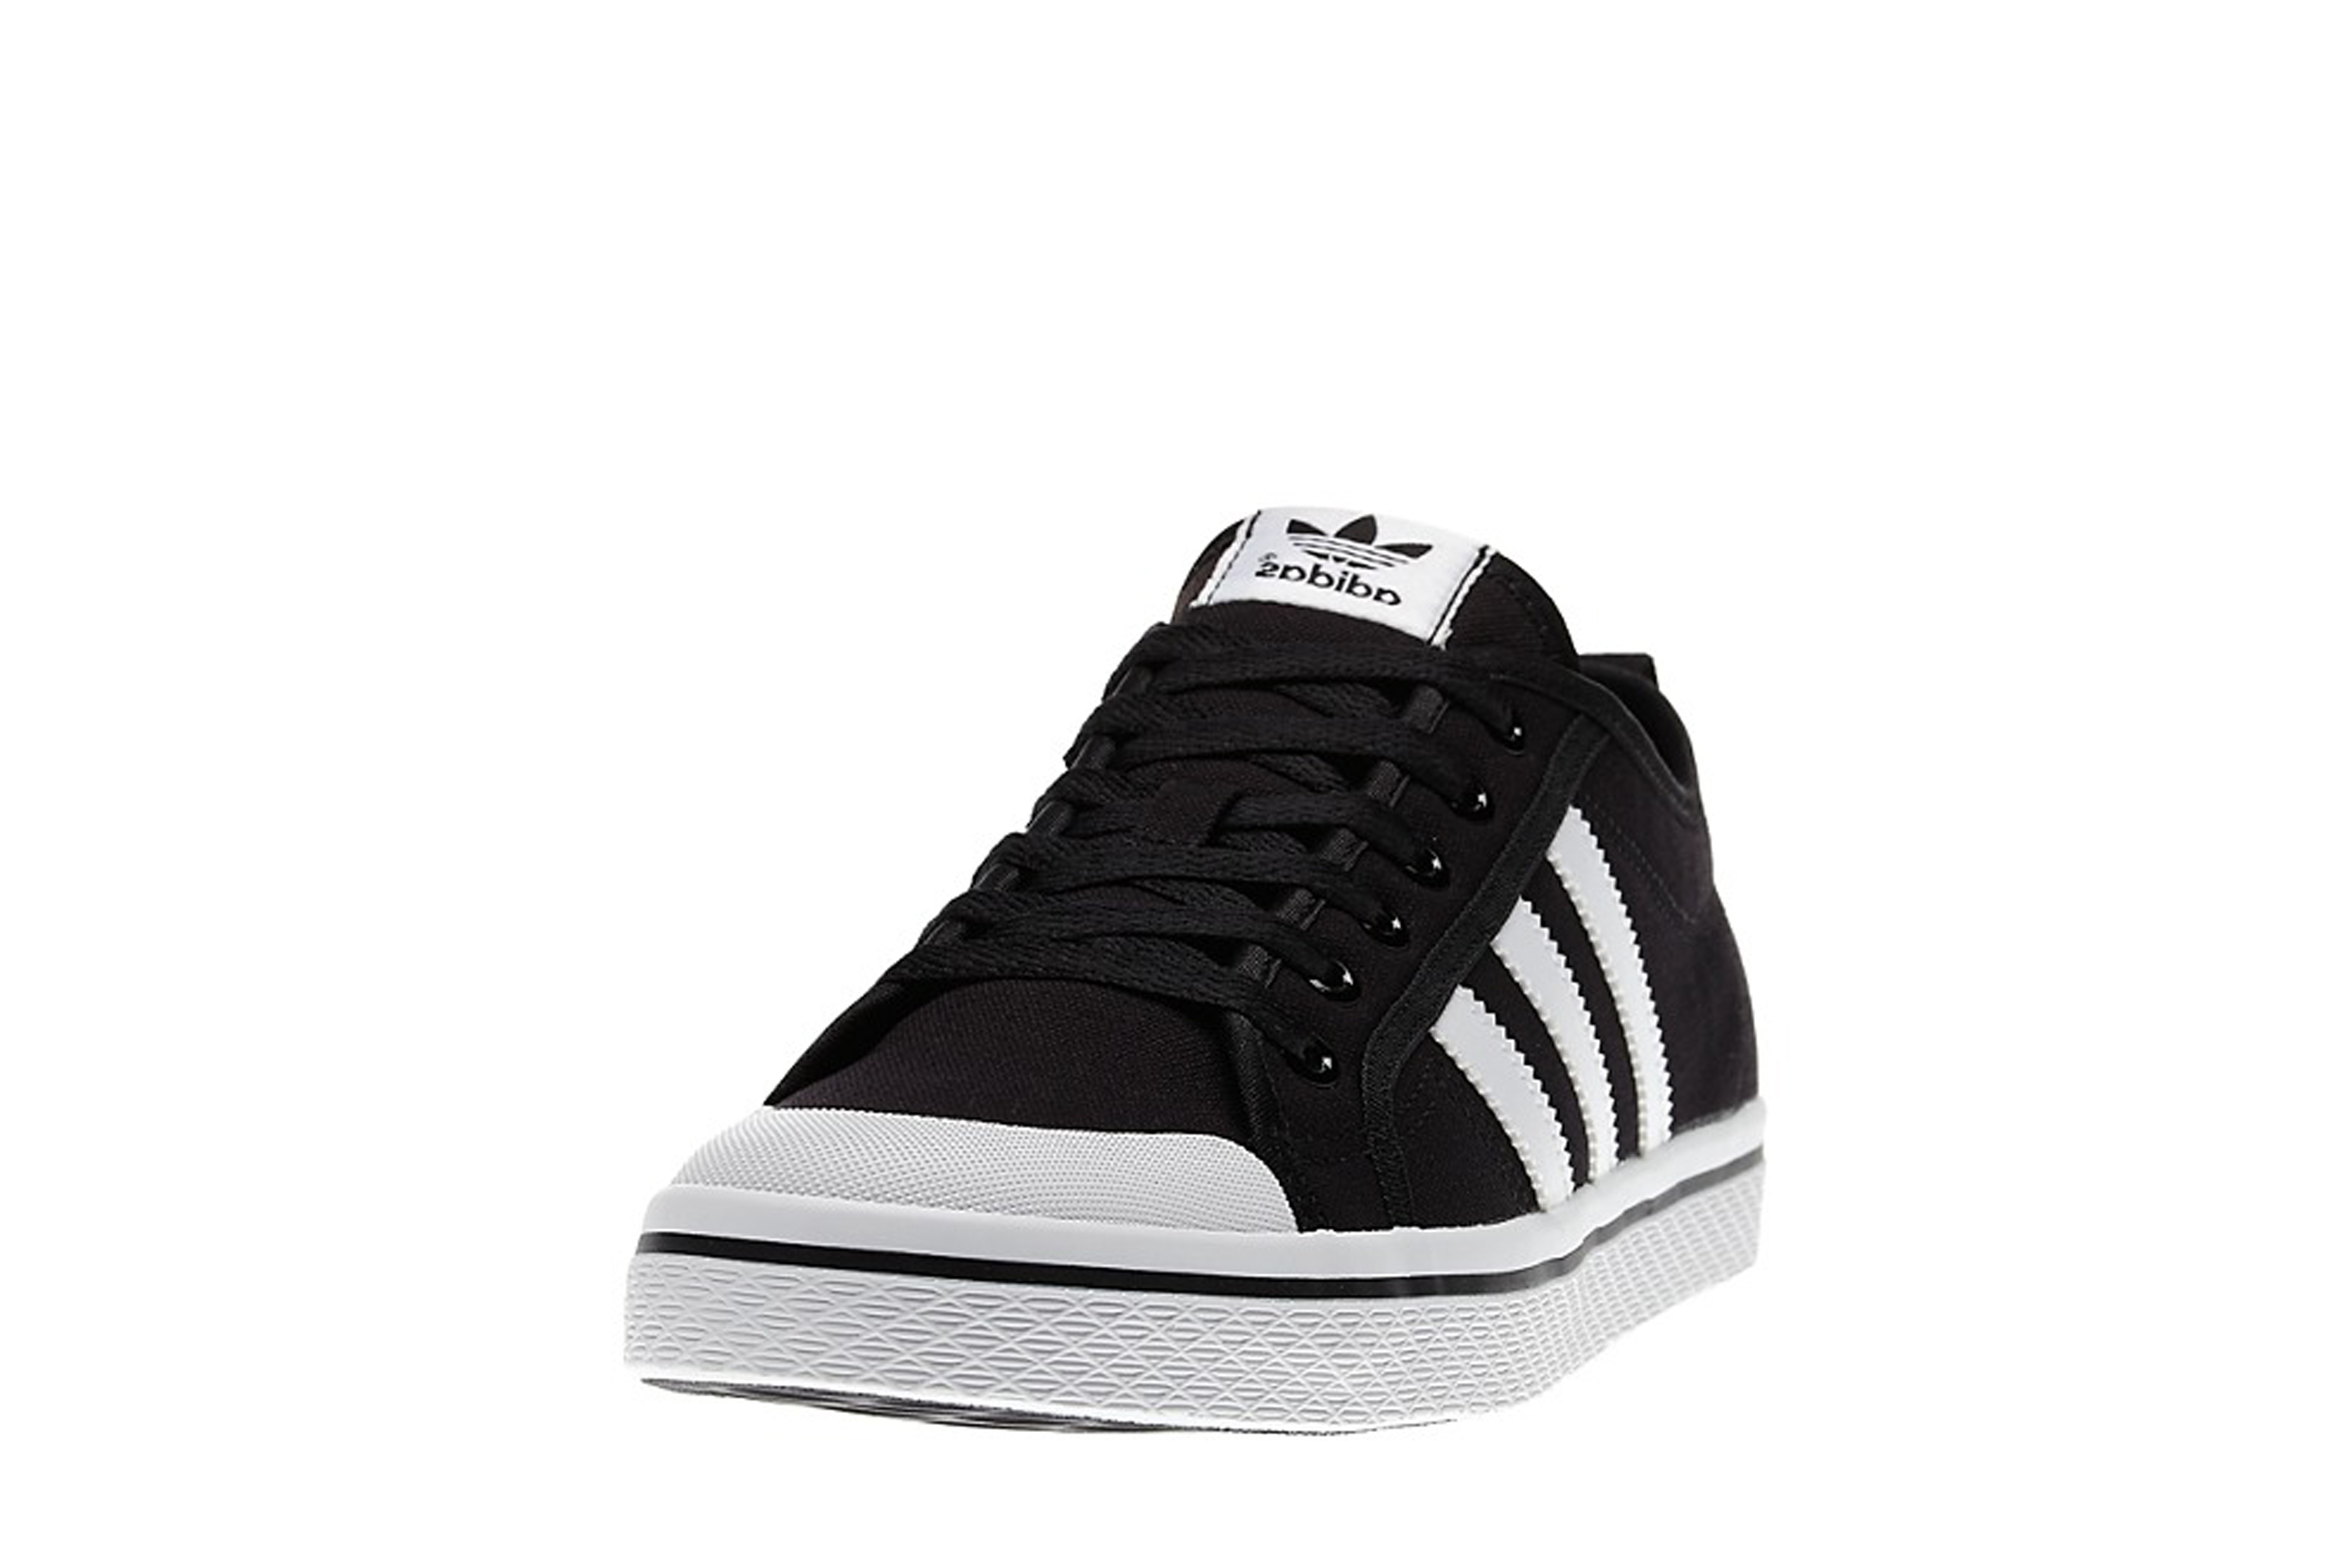 adidas Stripes Low Black/White/Black